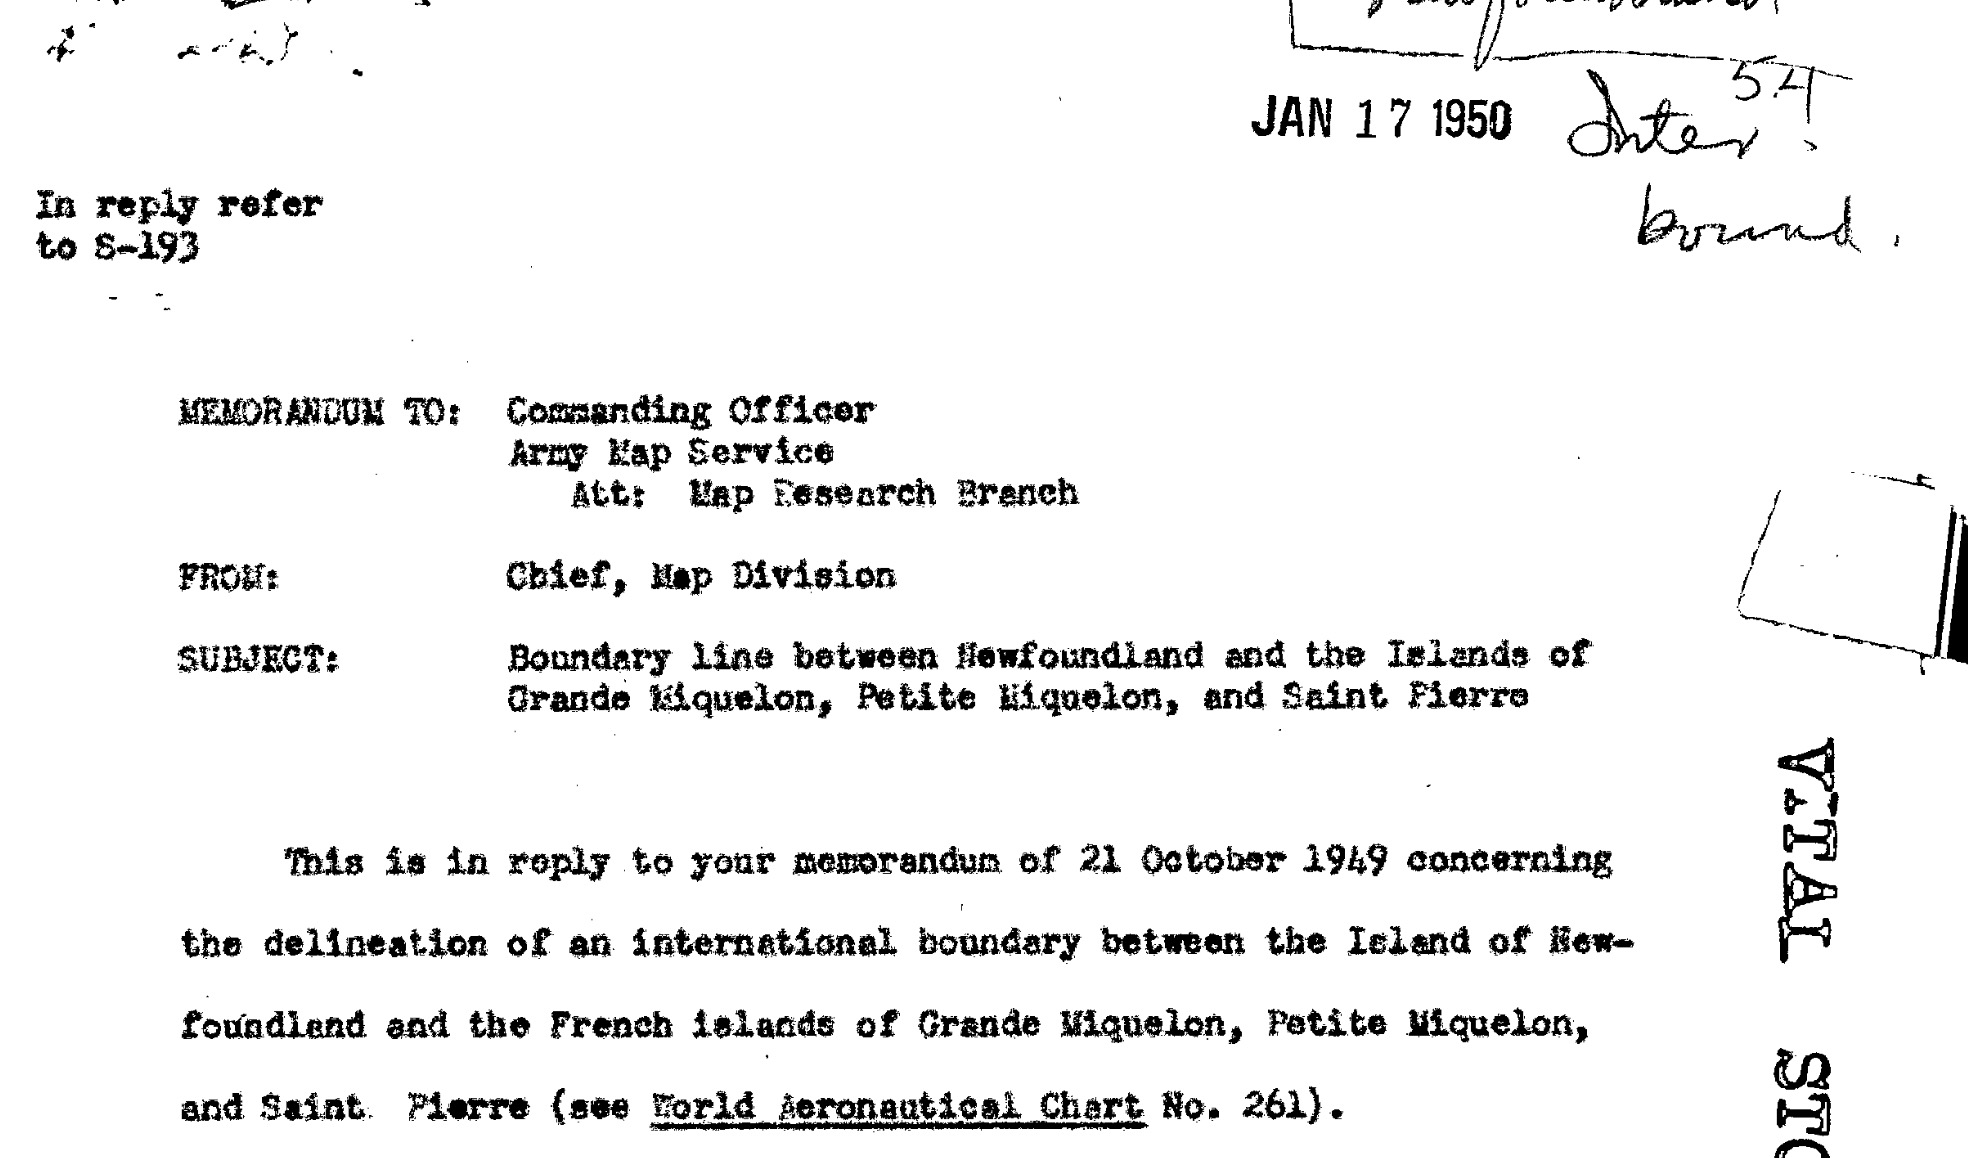 1950 – CREST – BOUNDARY LINE BETWEEN NEWFOUNDLAND AND THE ISLANDS OF GRANDE MIQUELON, PETITE MIQUELON, AND SAINT PIERRE